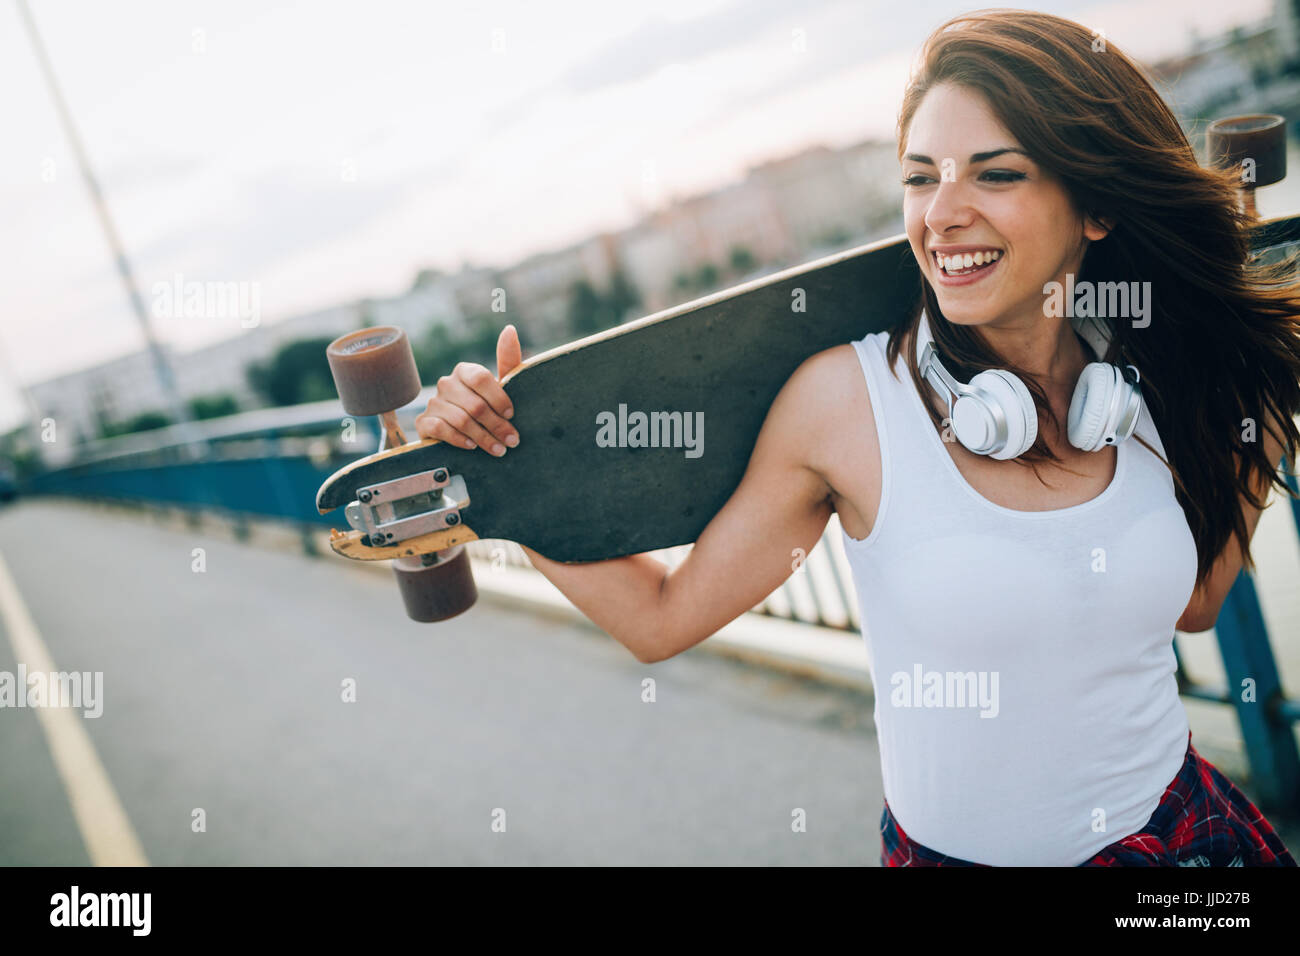 Portrait of beautiful smiling girl skateboard transport Banque D'Images